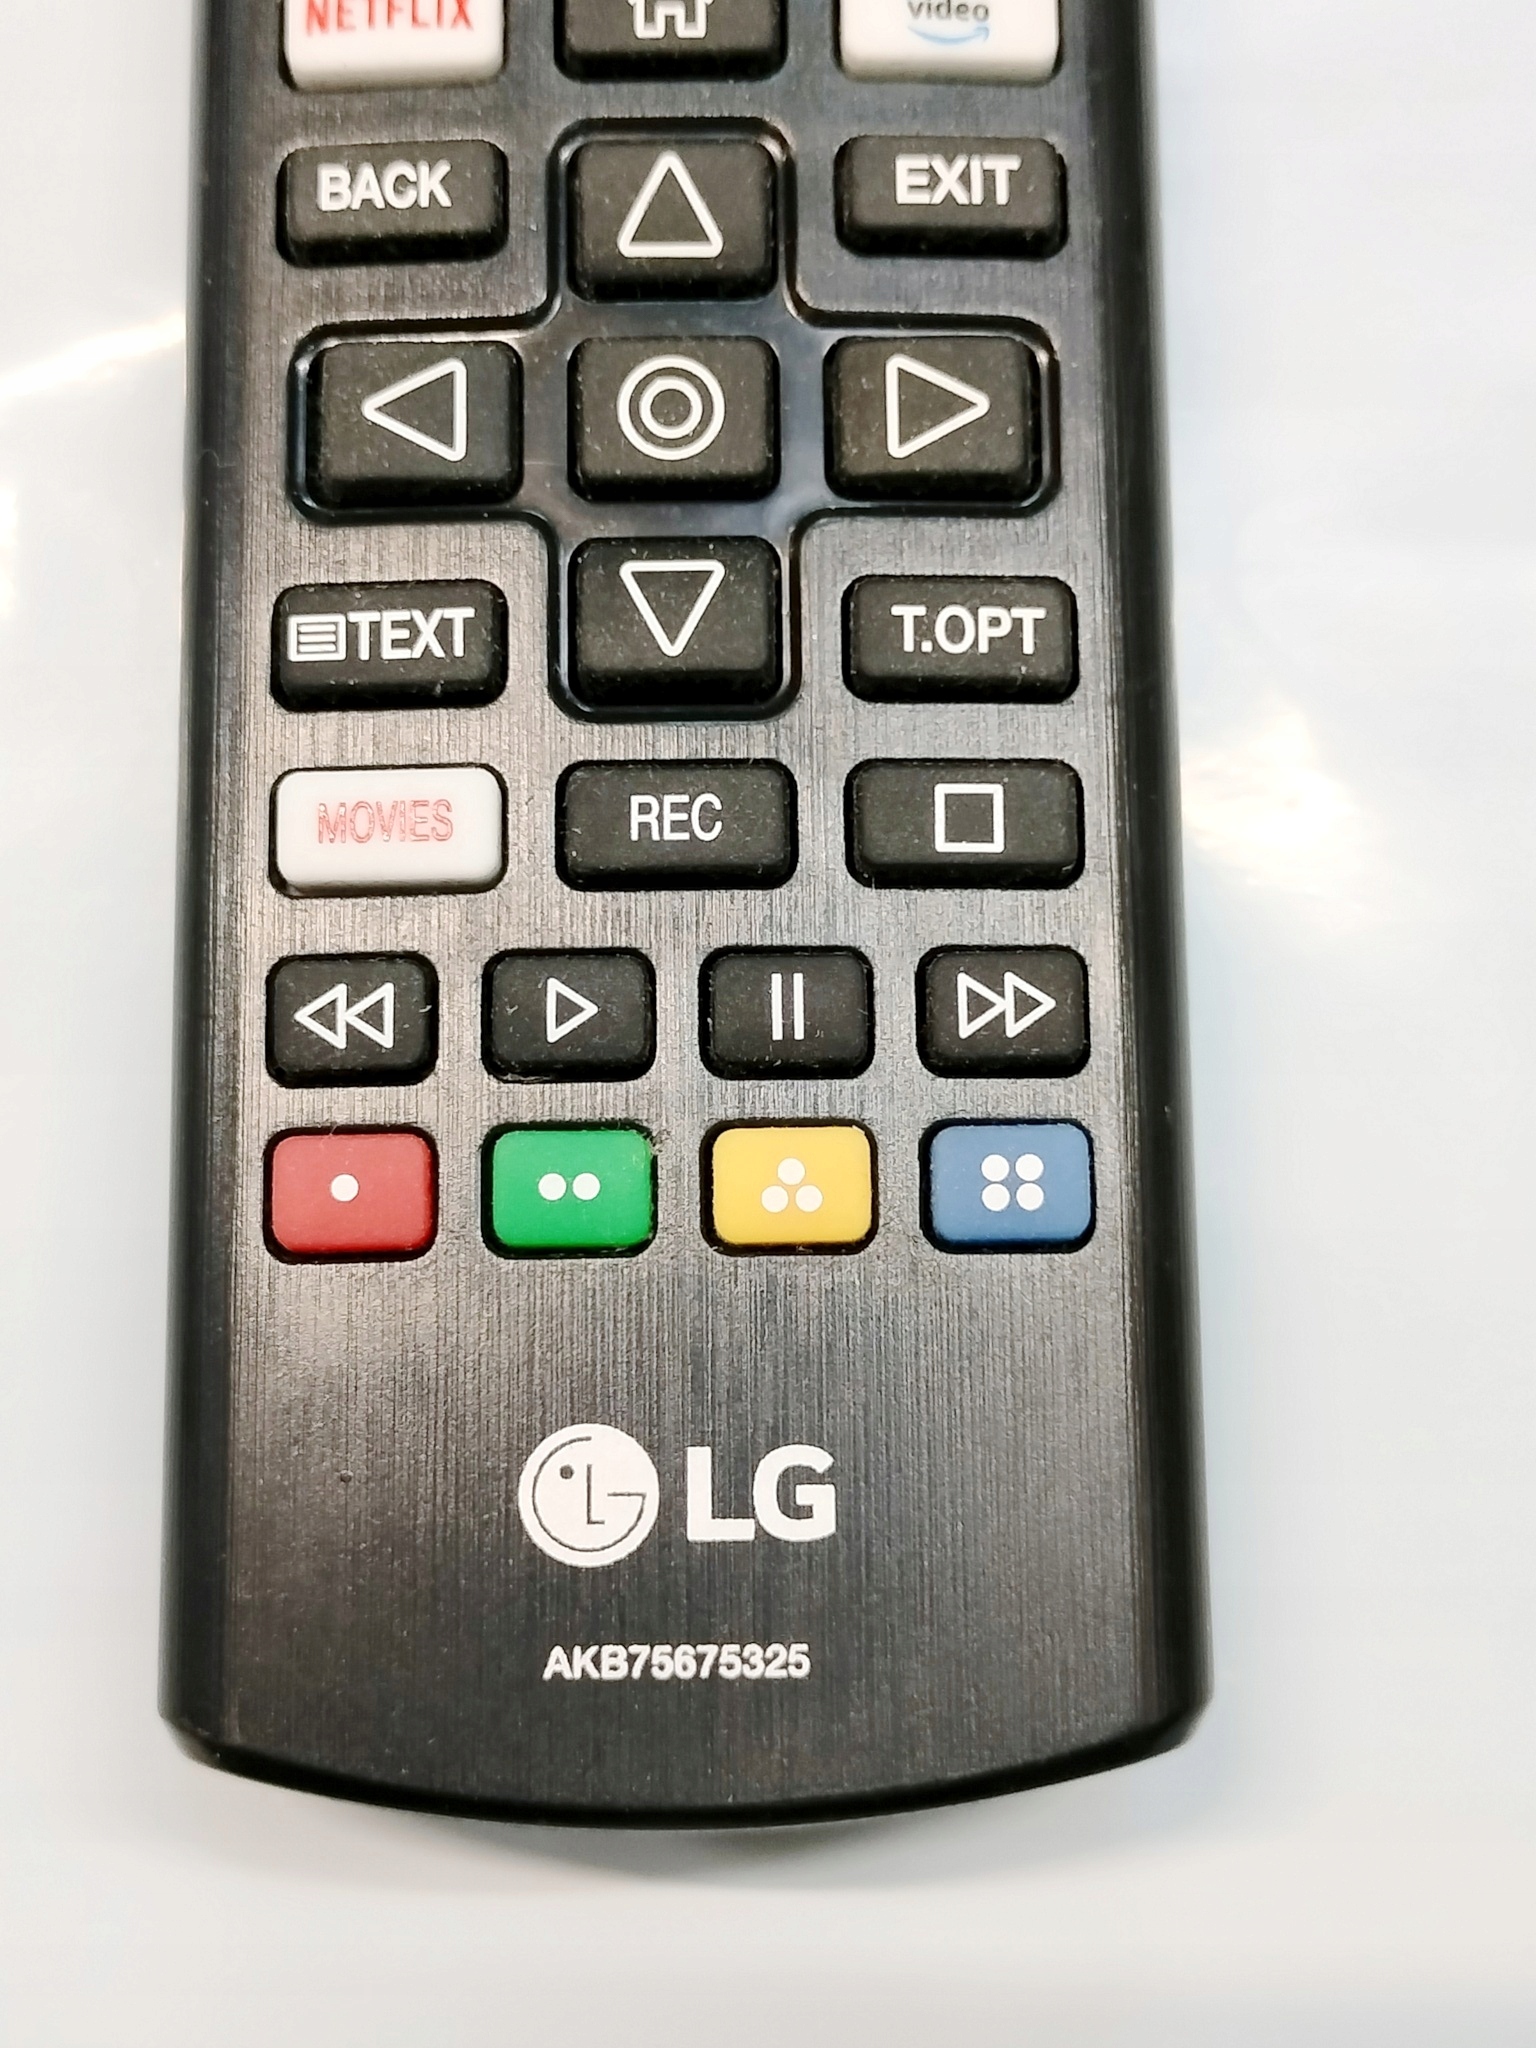 PILOT DO TV LG AKB756753325 Oryginał Smart NETFLIX Producent LG